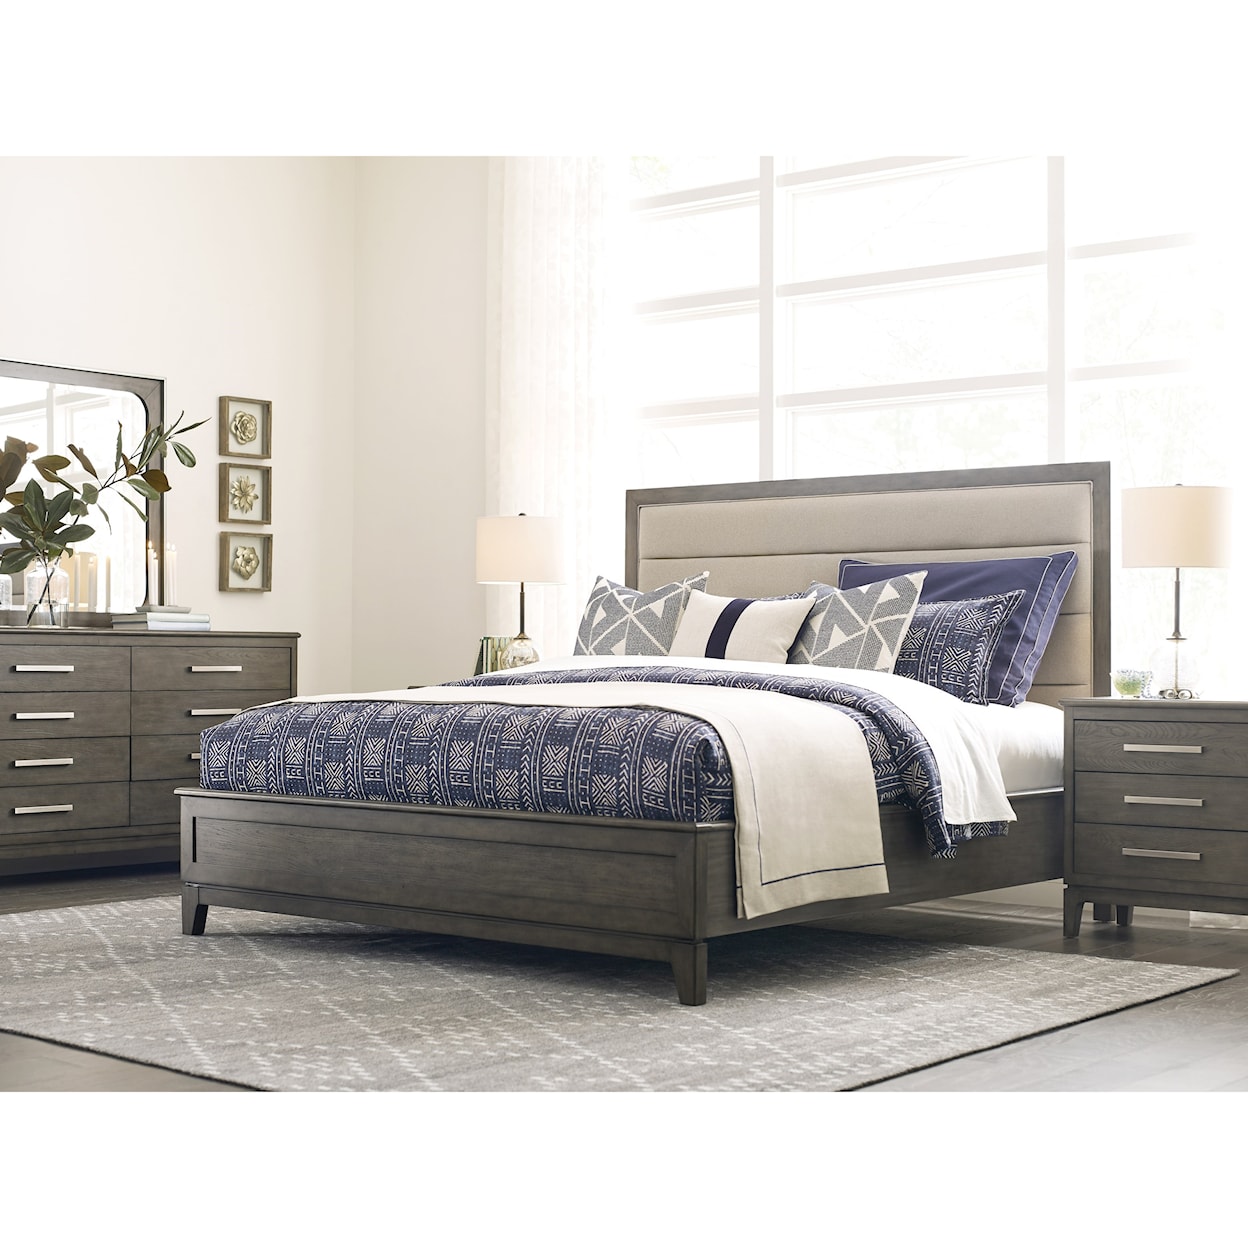 Kincaid Furniture Cascade Queen Bedroom Group